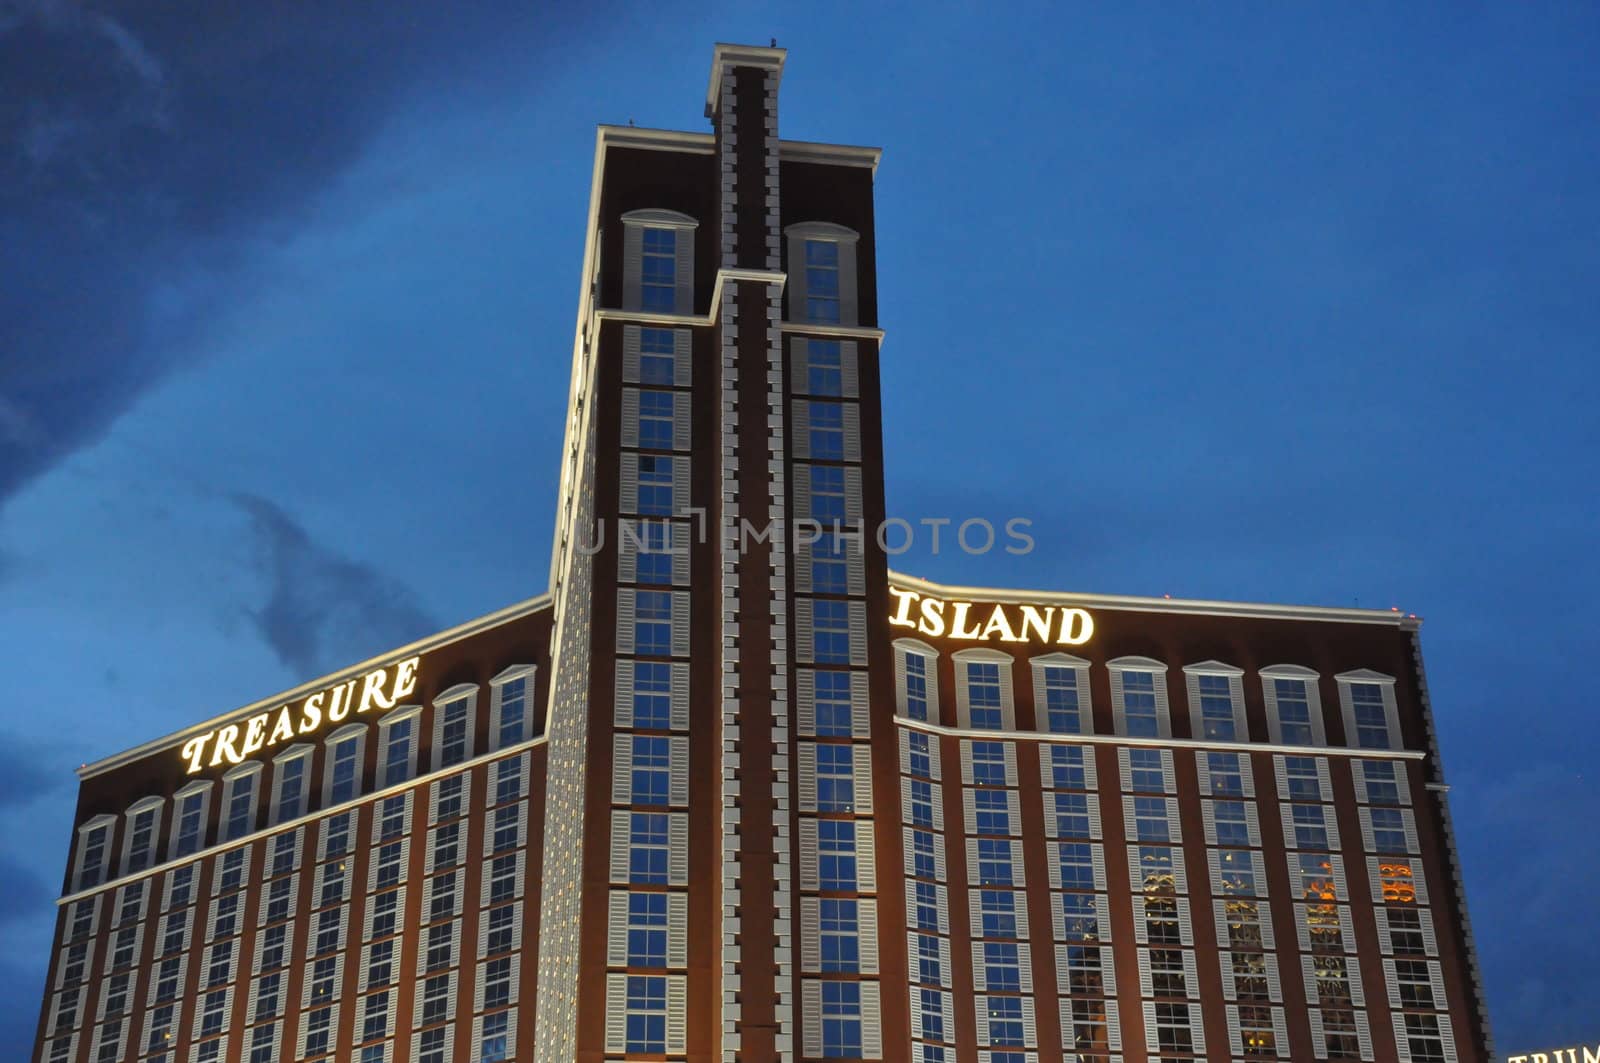 Treasure Island Hotel and Casino in Las Vegas by sainaniritu